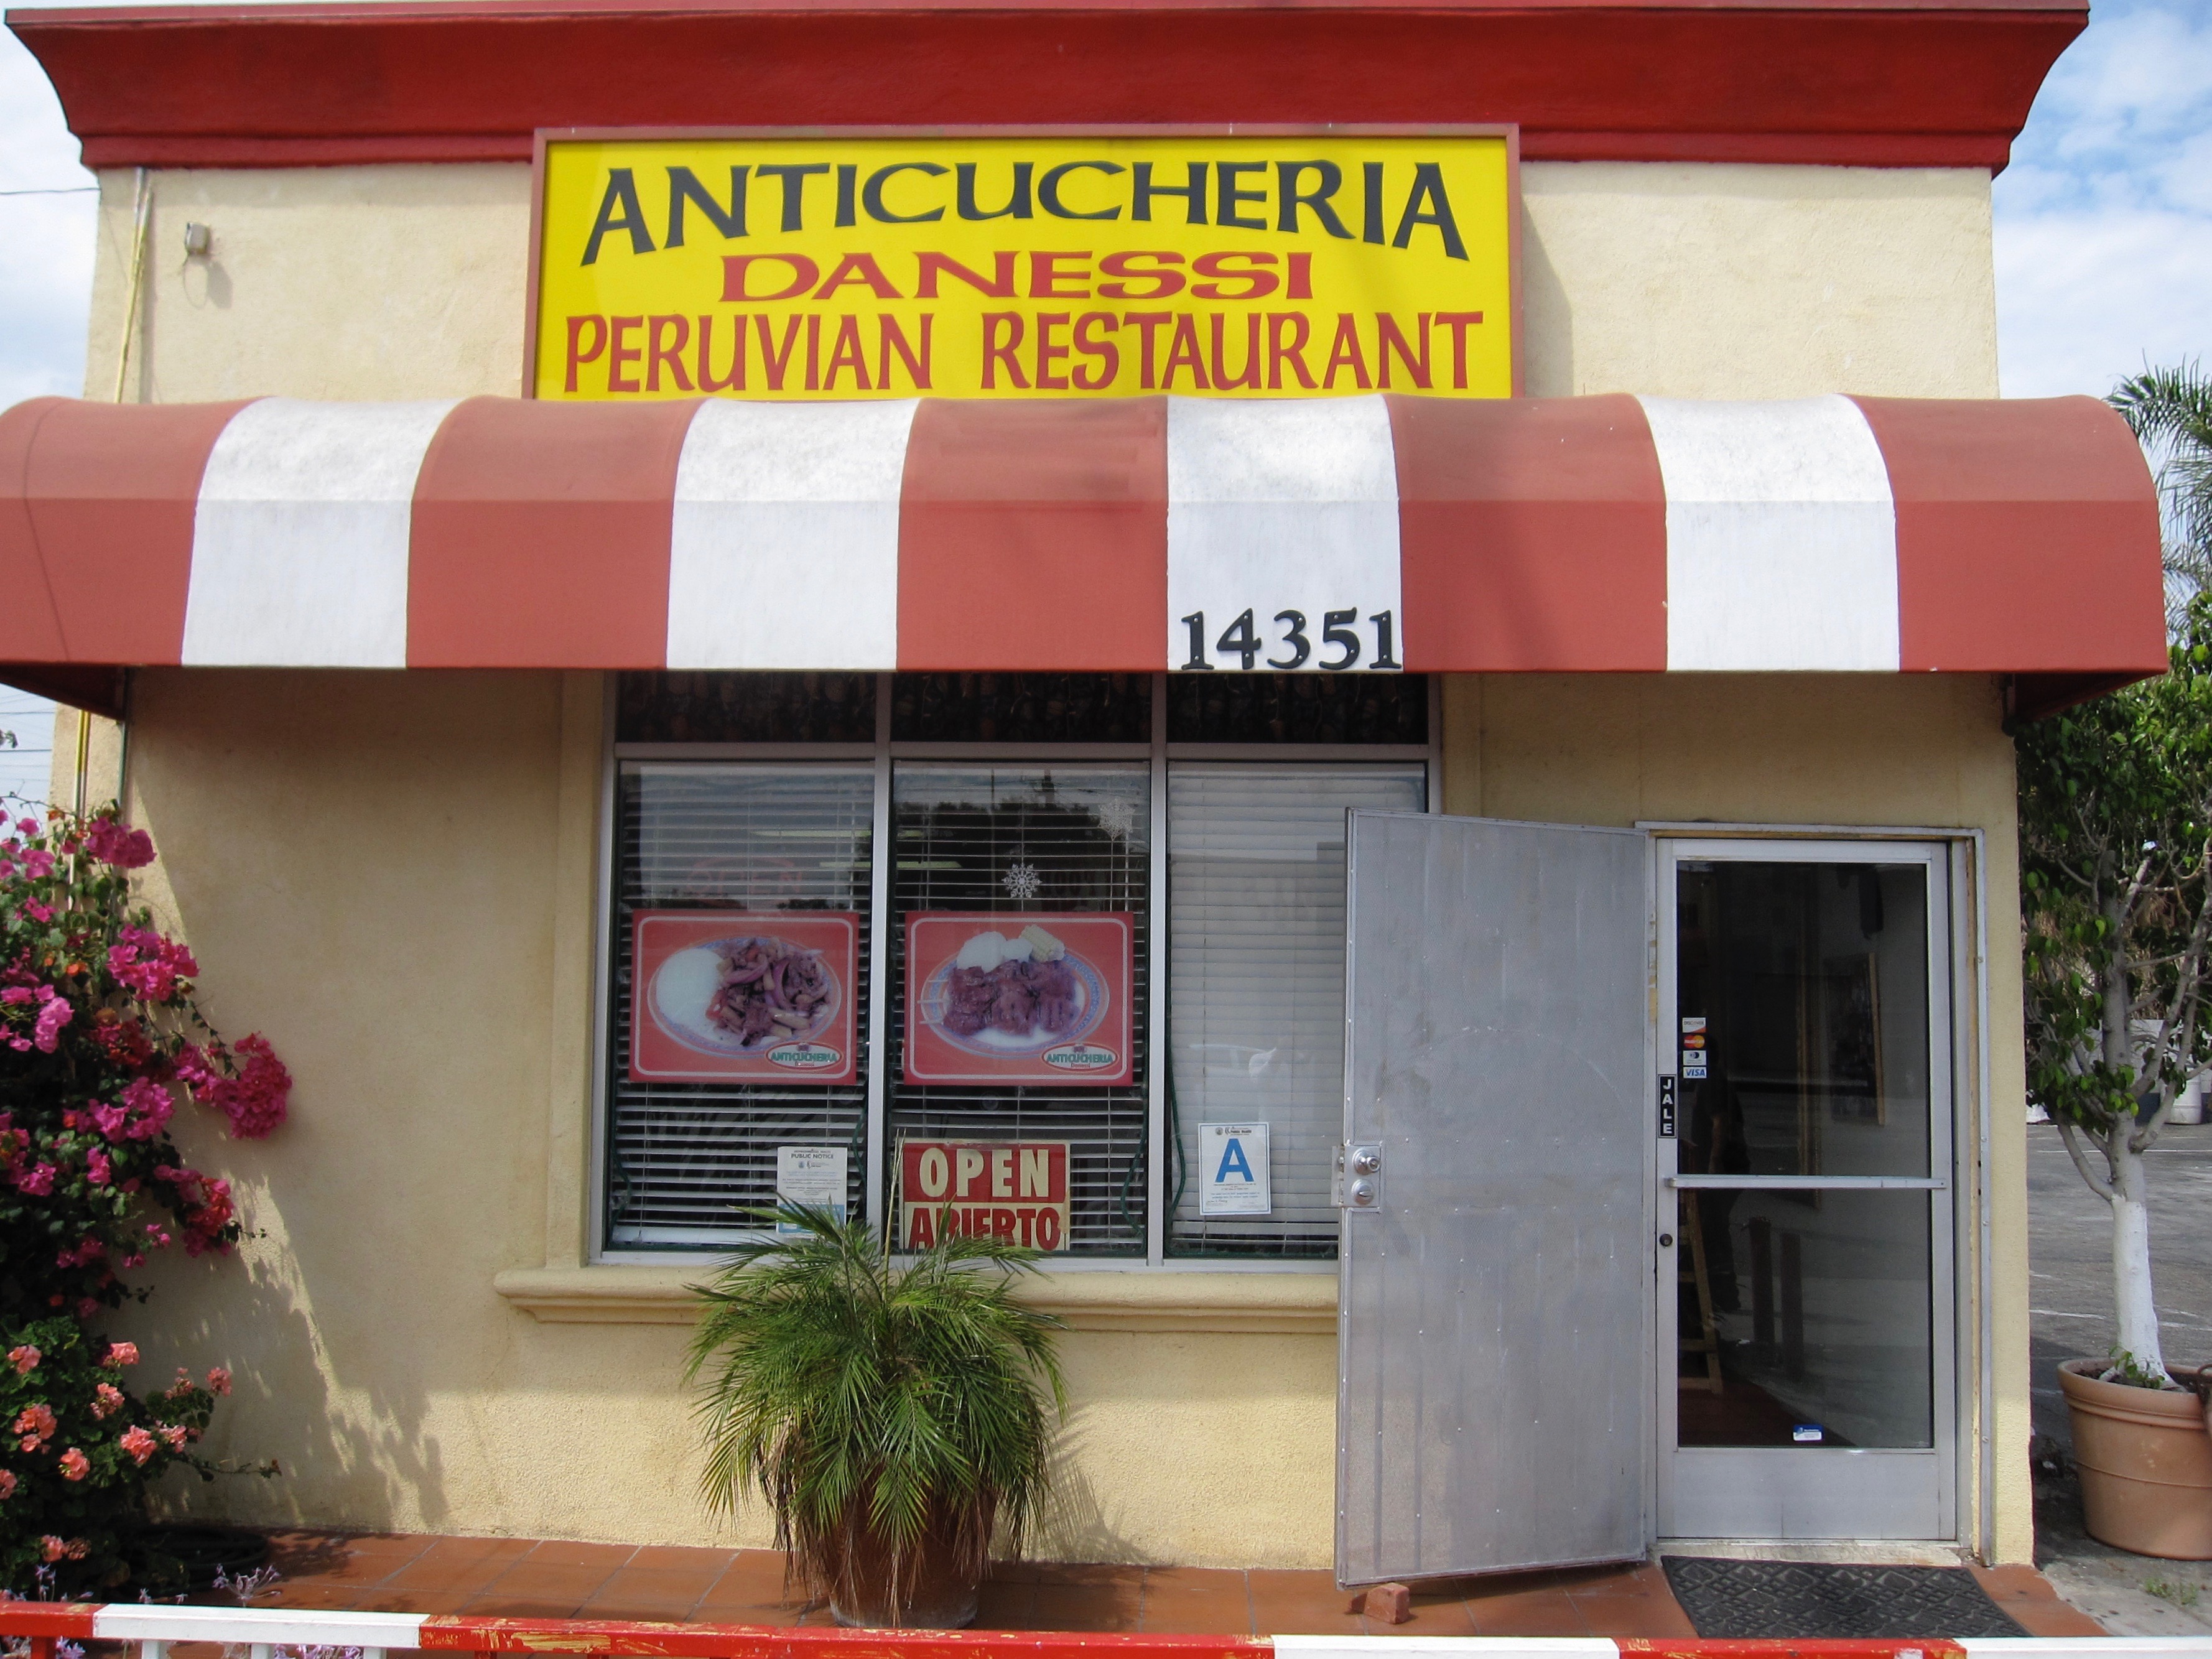 Peruvian Restaurant Los Angeles